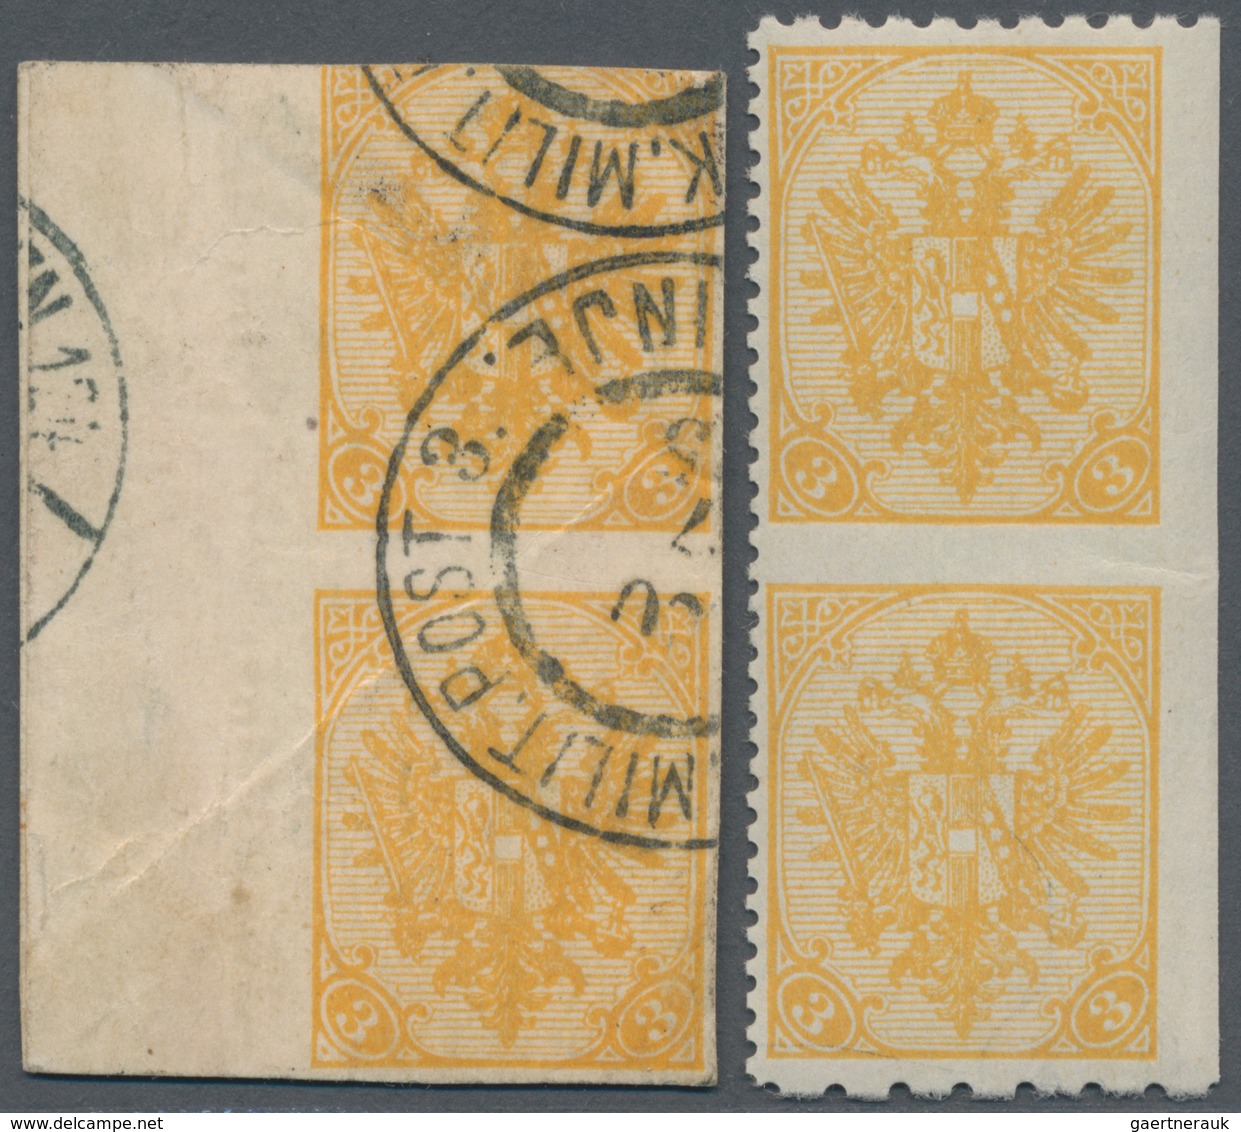 Bosnien Und Herzegowina: 1900, Definitives "Double Eagle", 3h. Yellow, Specialised Assortment Of 15 - Bosnia And Herzegovina